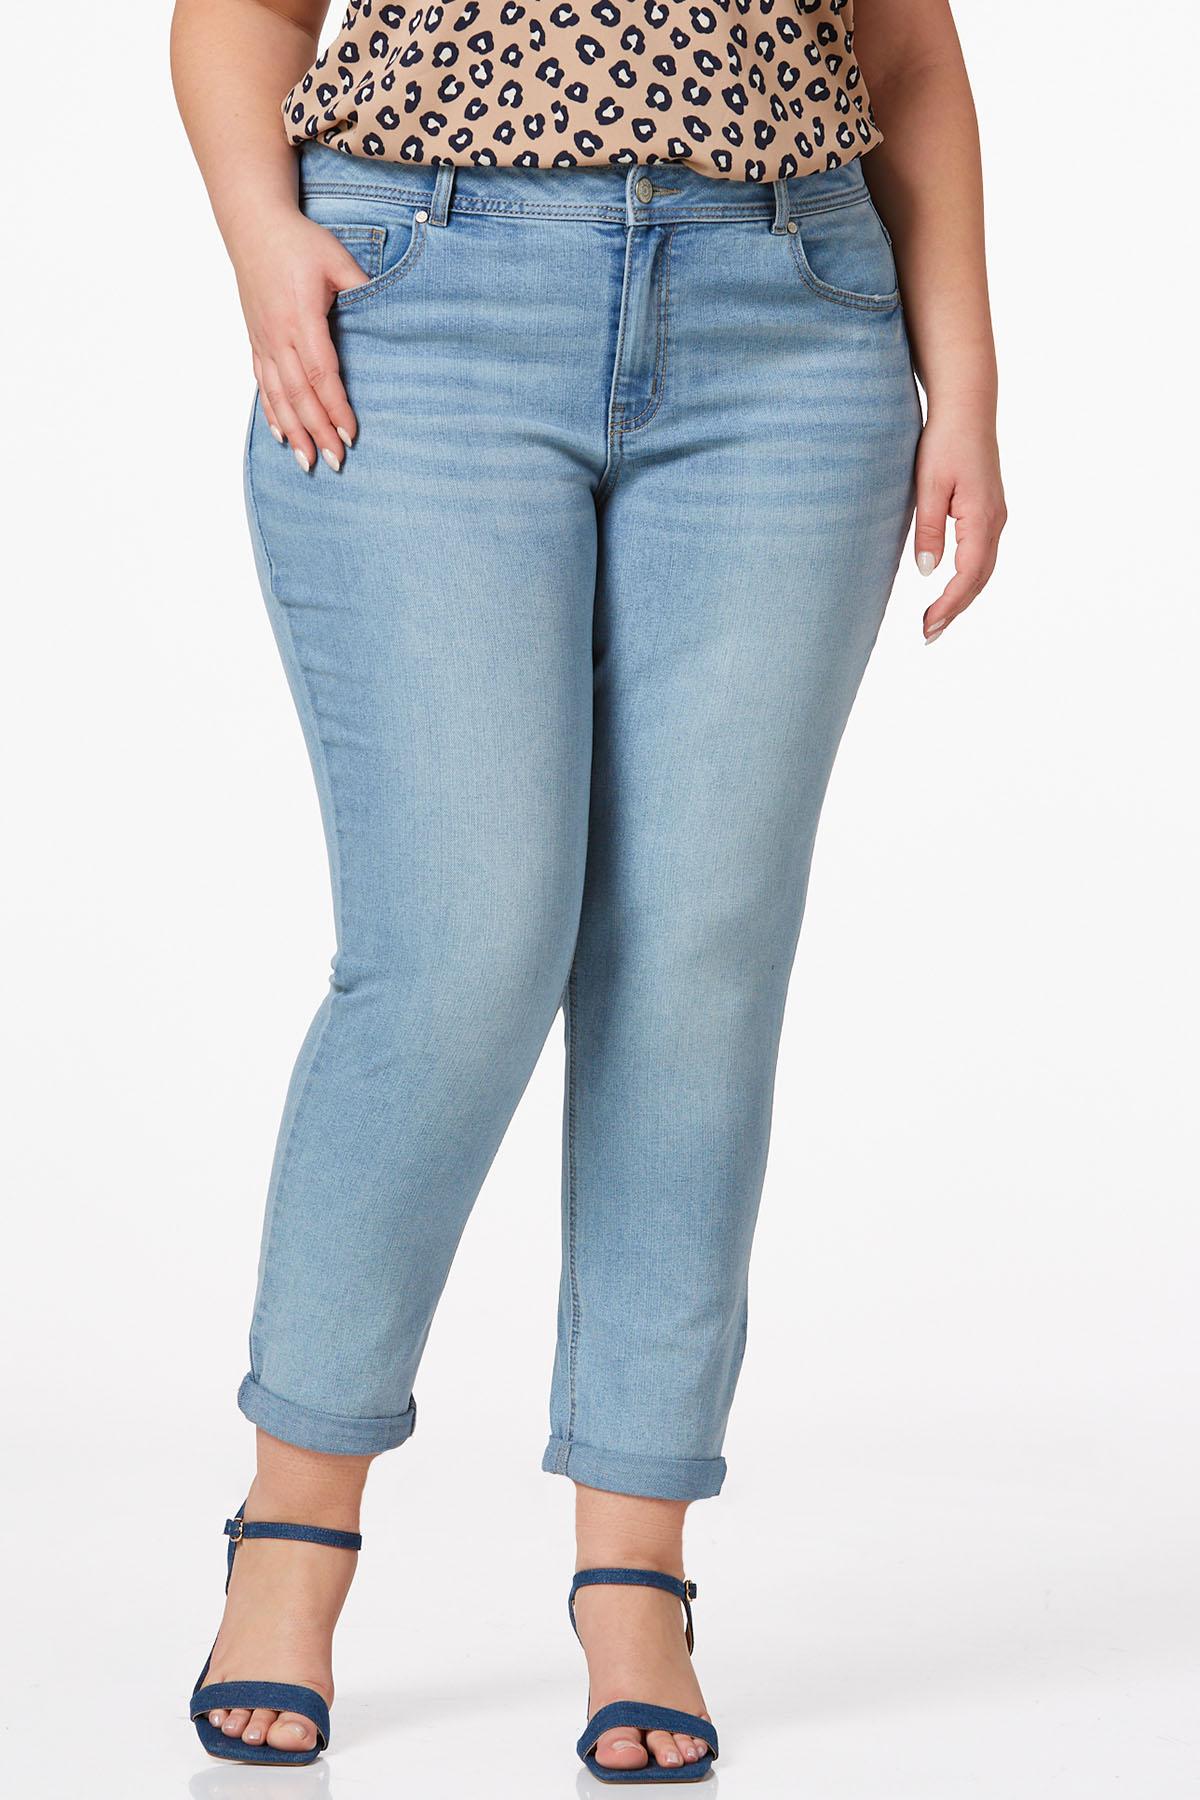 Cato Fashions  Cato Plus Size High-Rise Girlfriend Jeans